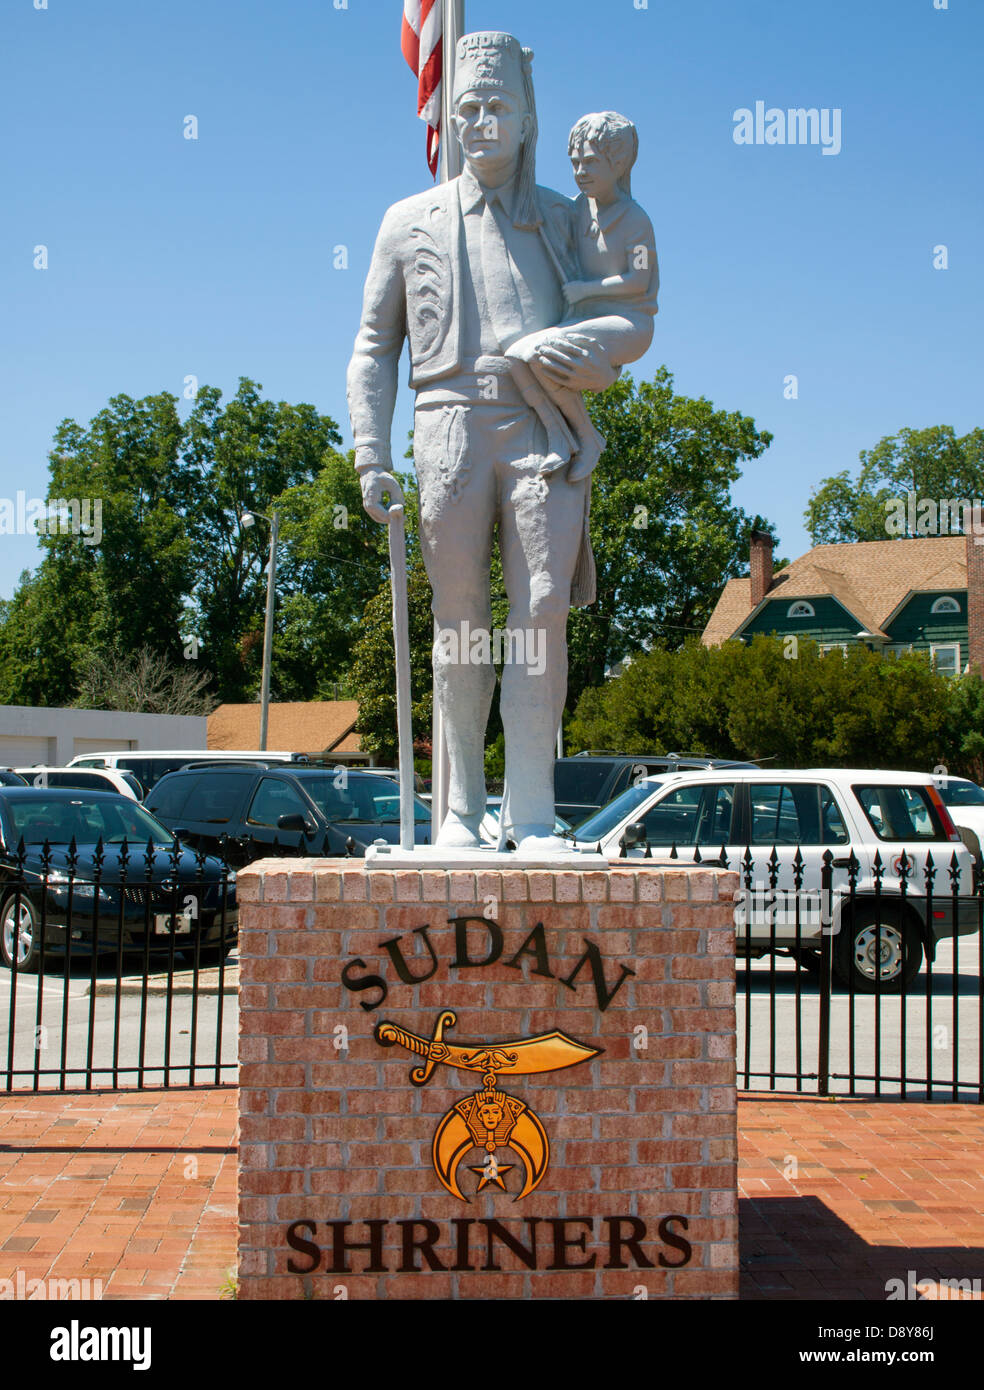 Sudan Shriner statue in New Bern North Carolina Stock Photo